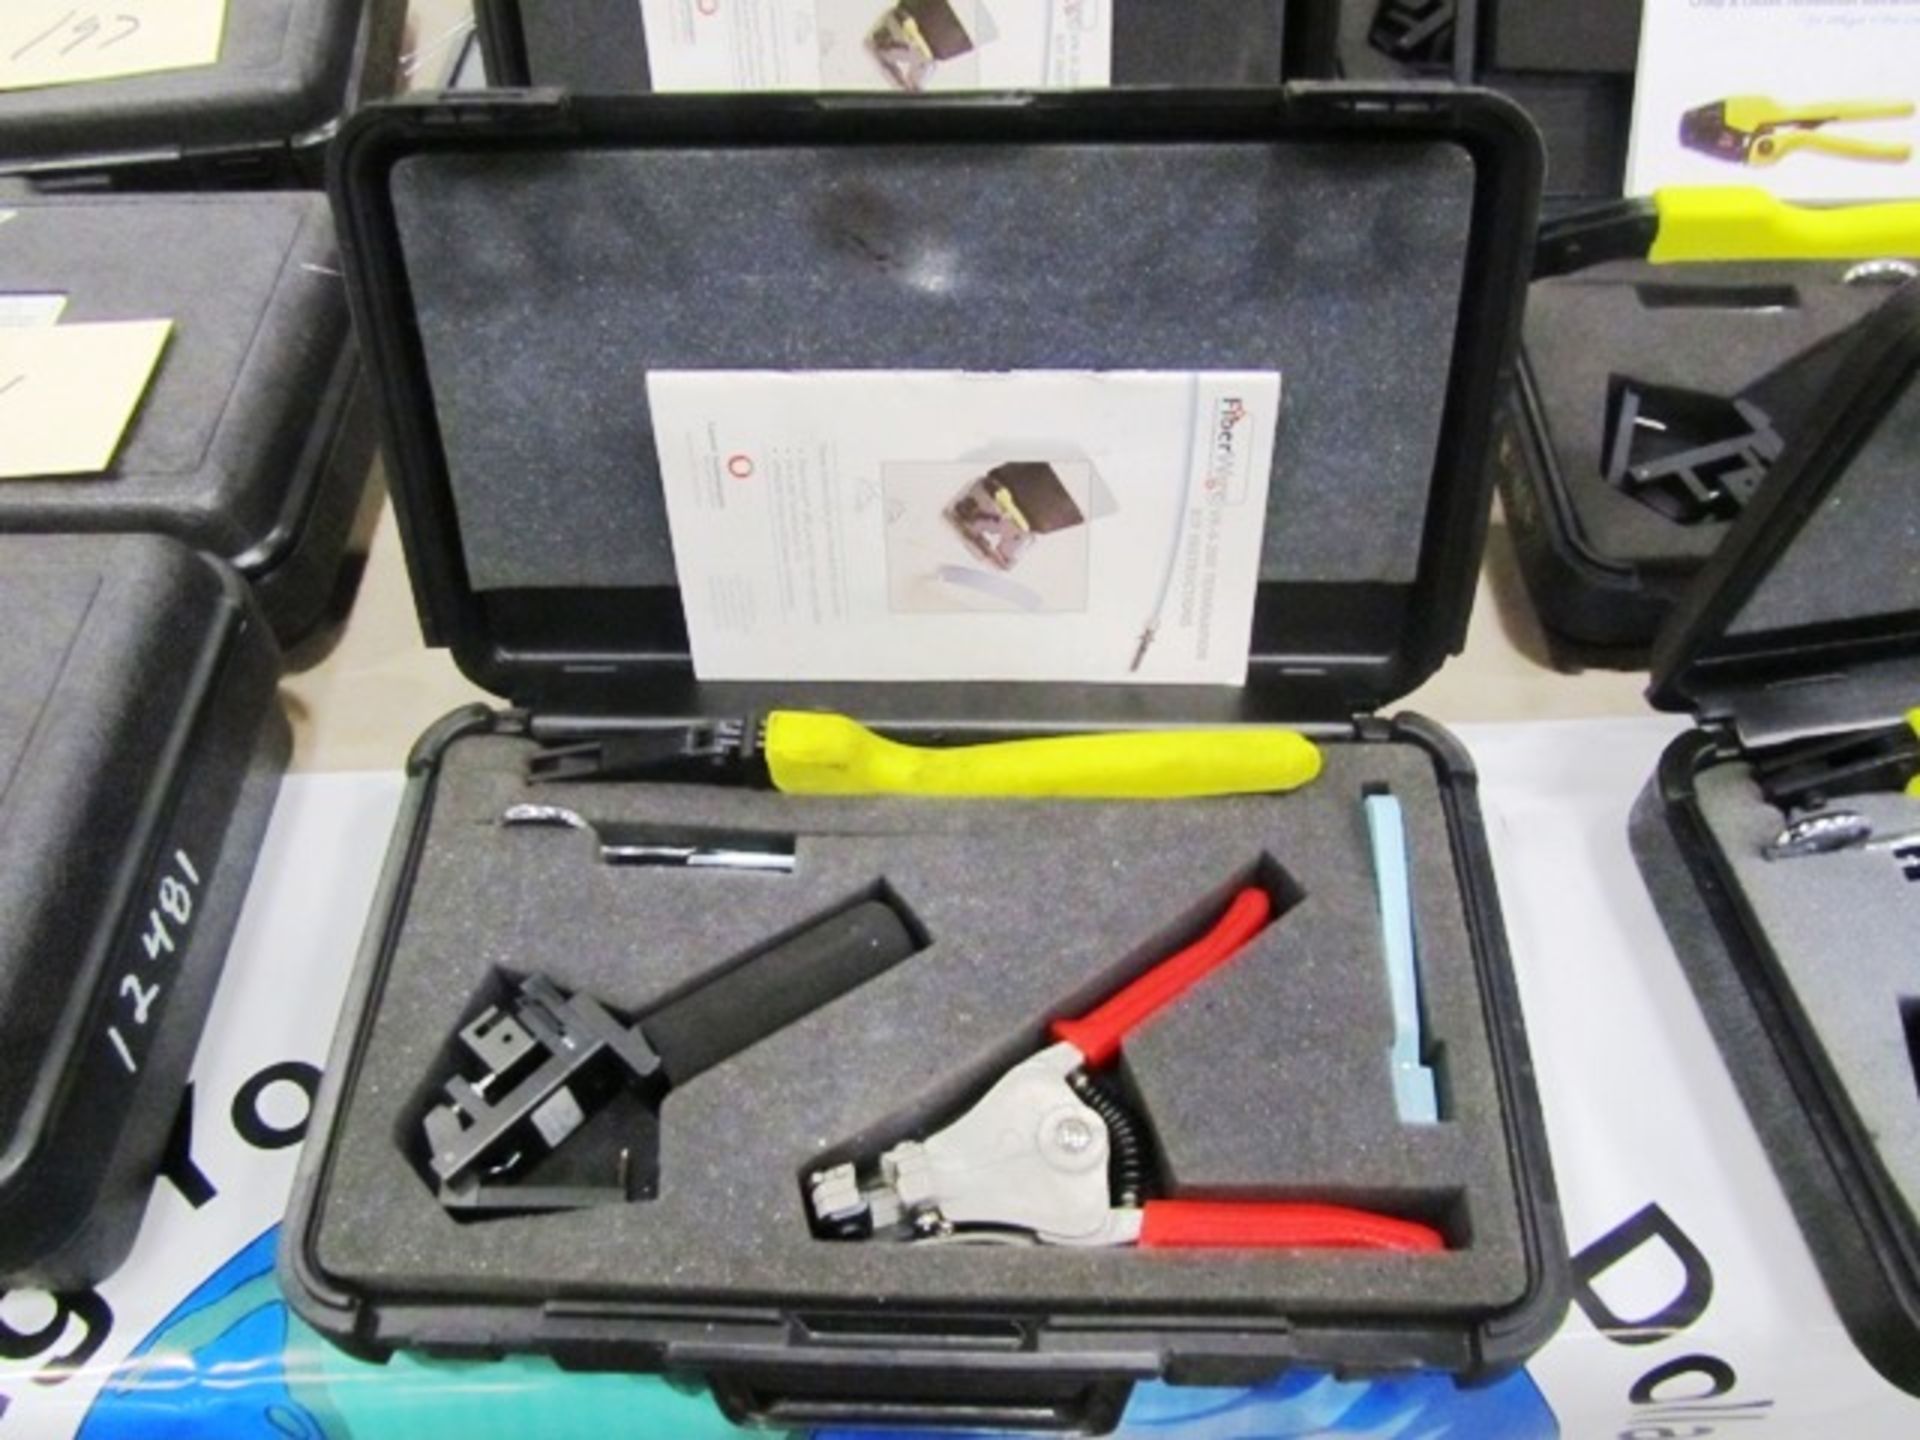 Fiberwire VK-6-200 HCS Crimp & Cleave Termination Kit